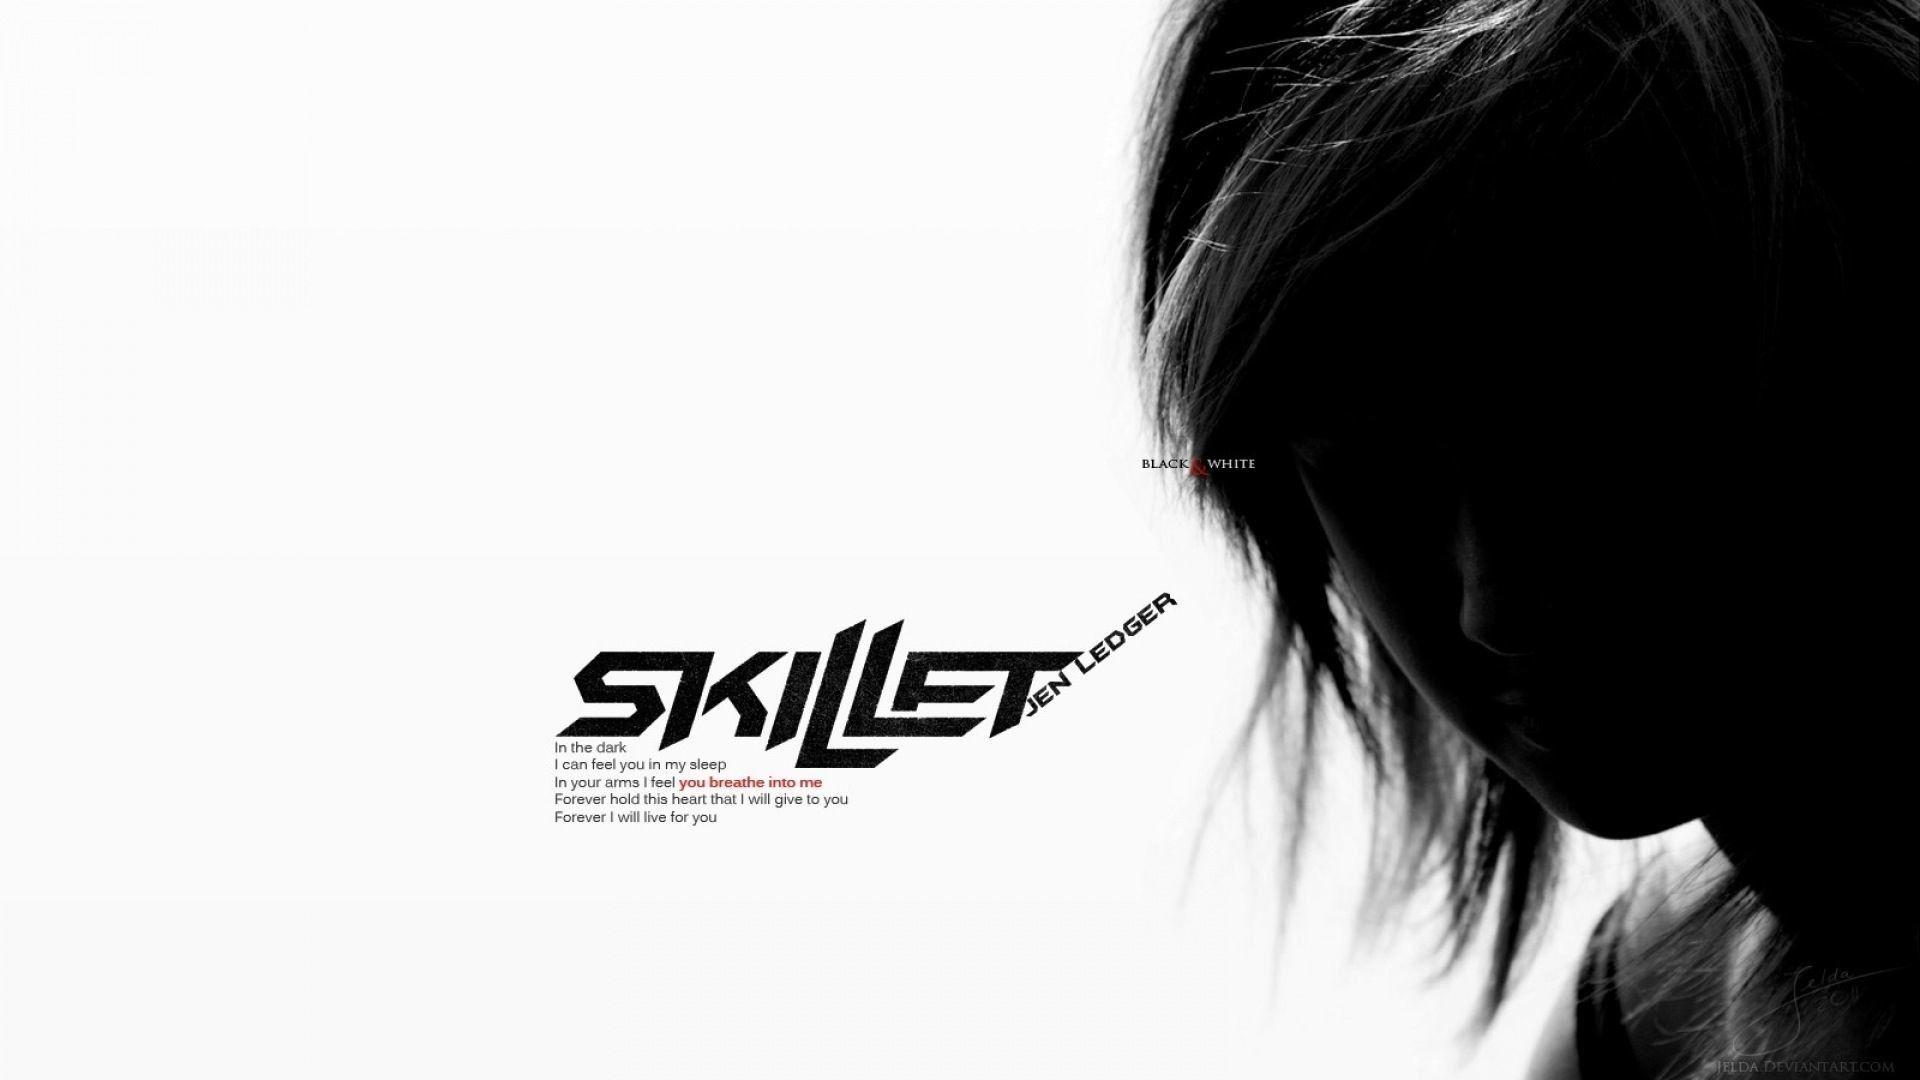 Skillet Awake wallpaper by NikoLibertyy  Download on ZEDGE  7d20